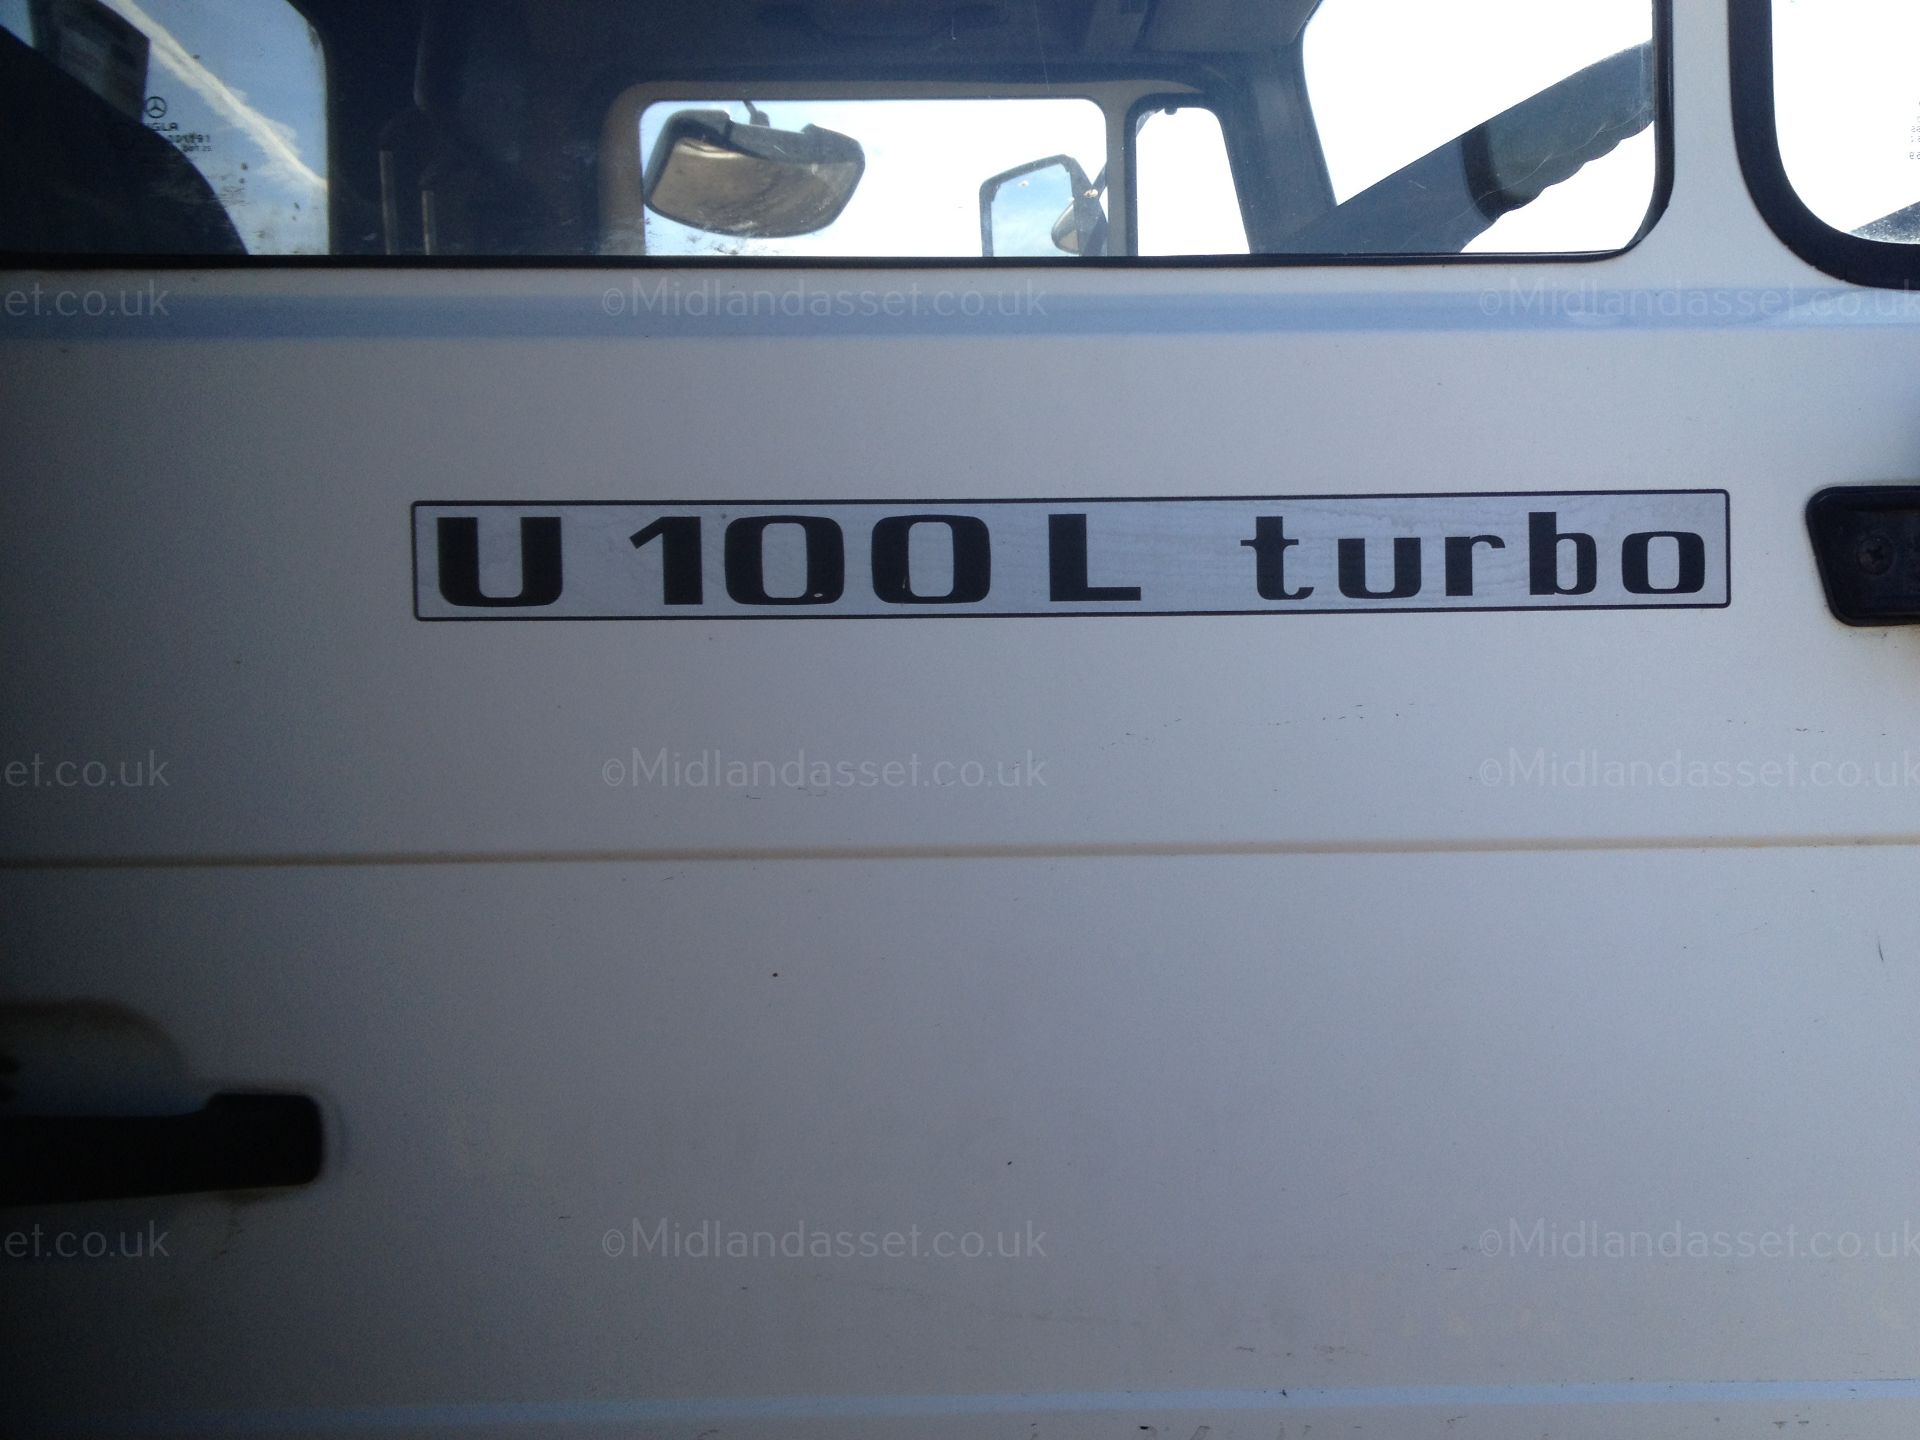 2002 UNIMOG U100L TURBO WITH REAR BOOM LIFT - Image 5 of 6